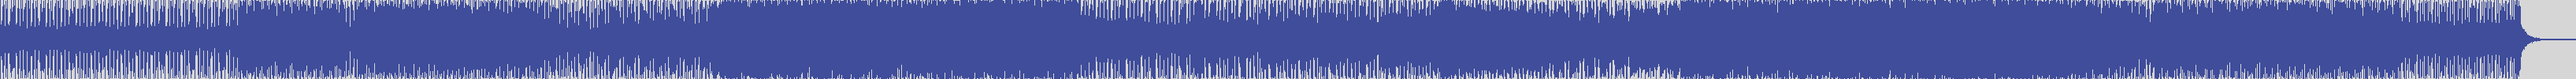 atomic_recordings [AR010] Kris Project - The Flute [Cristian Farigu Dj Club Mix] audio wave form